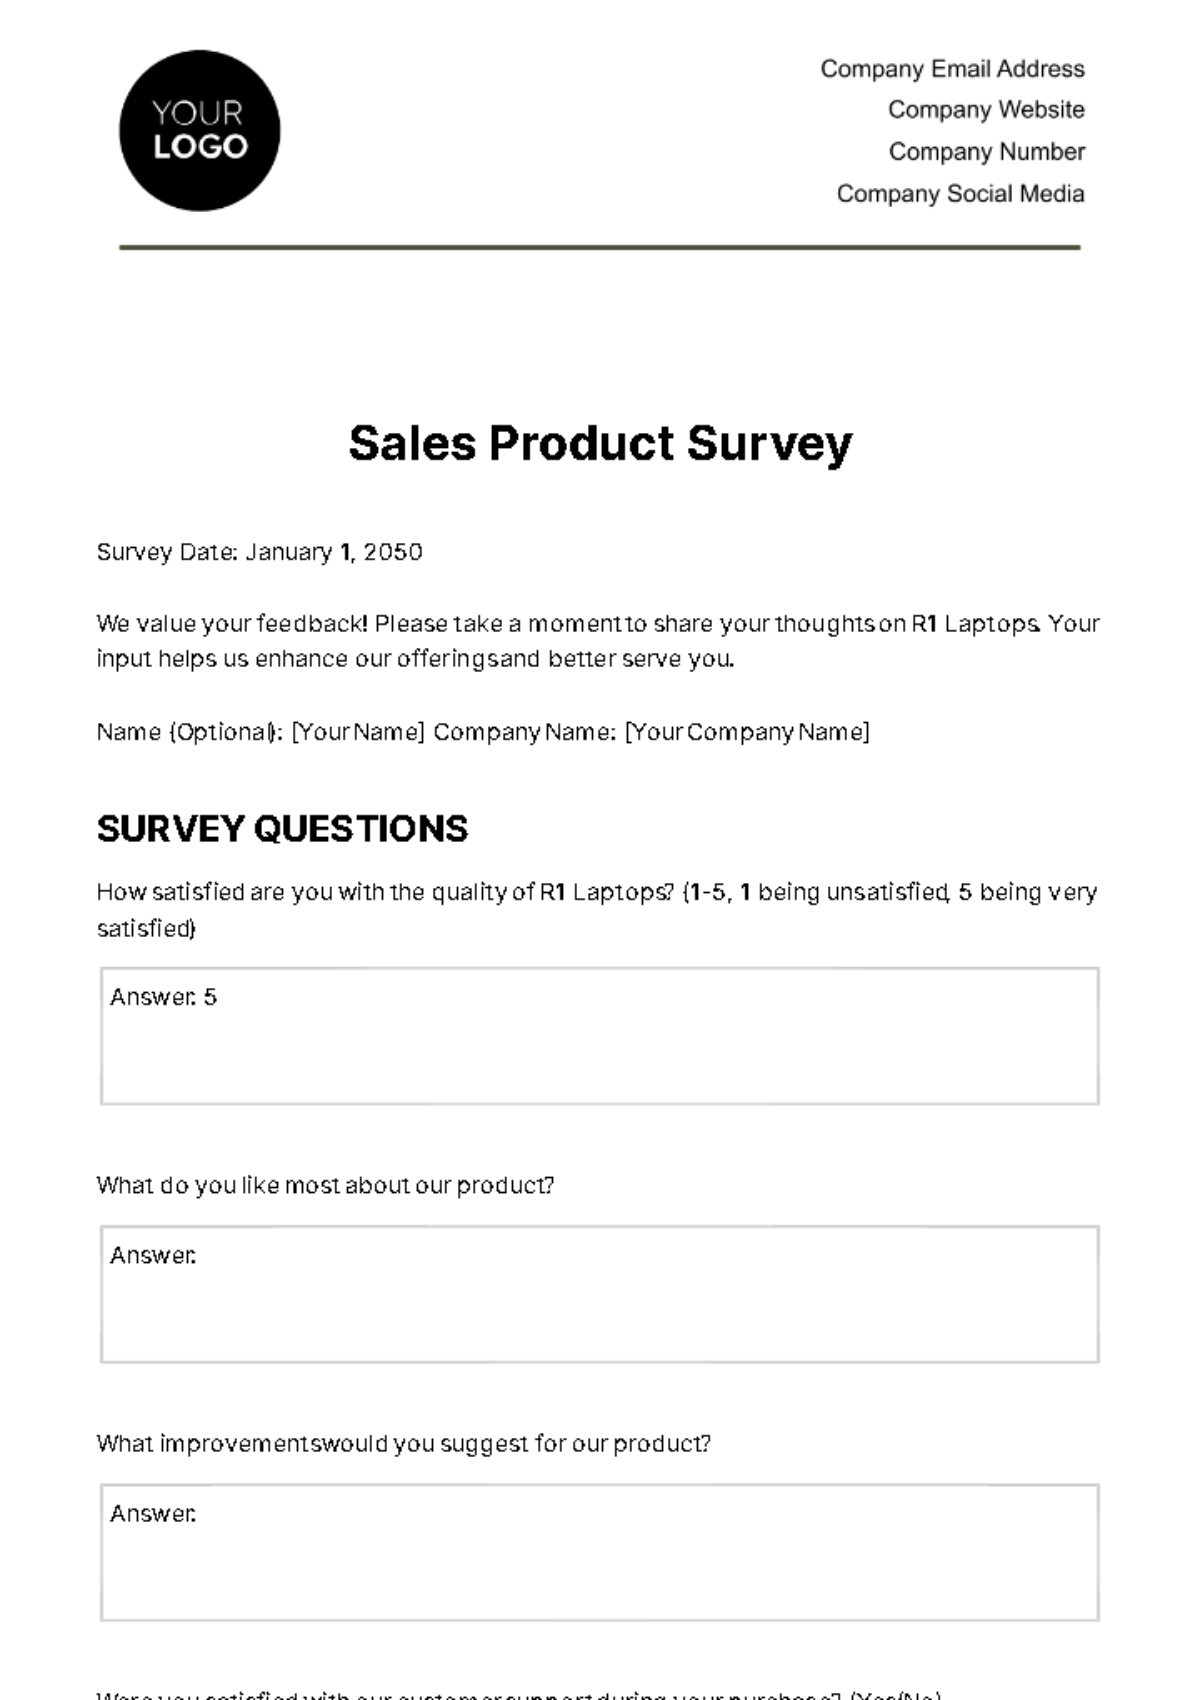 Sales Product Survey Template